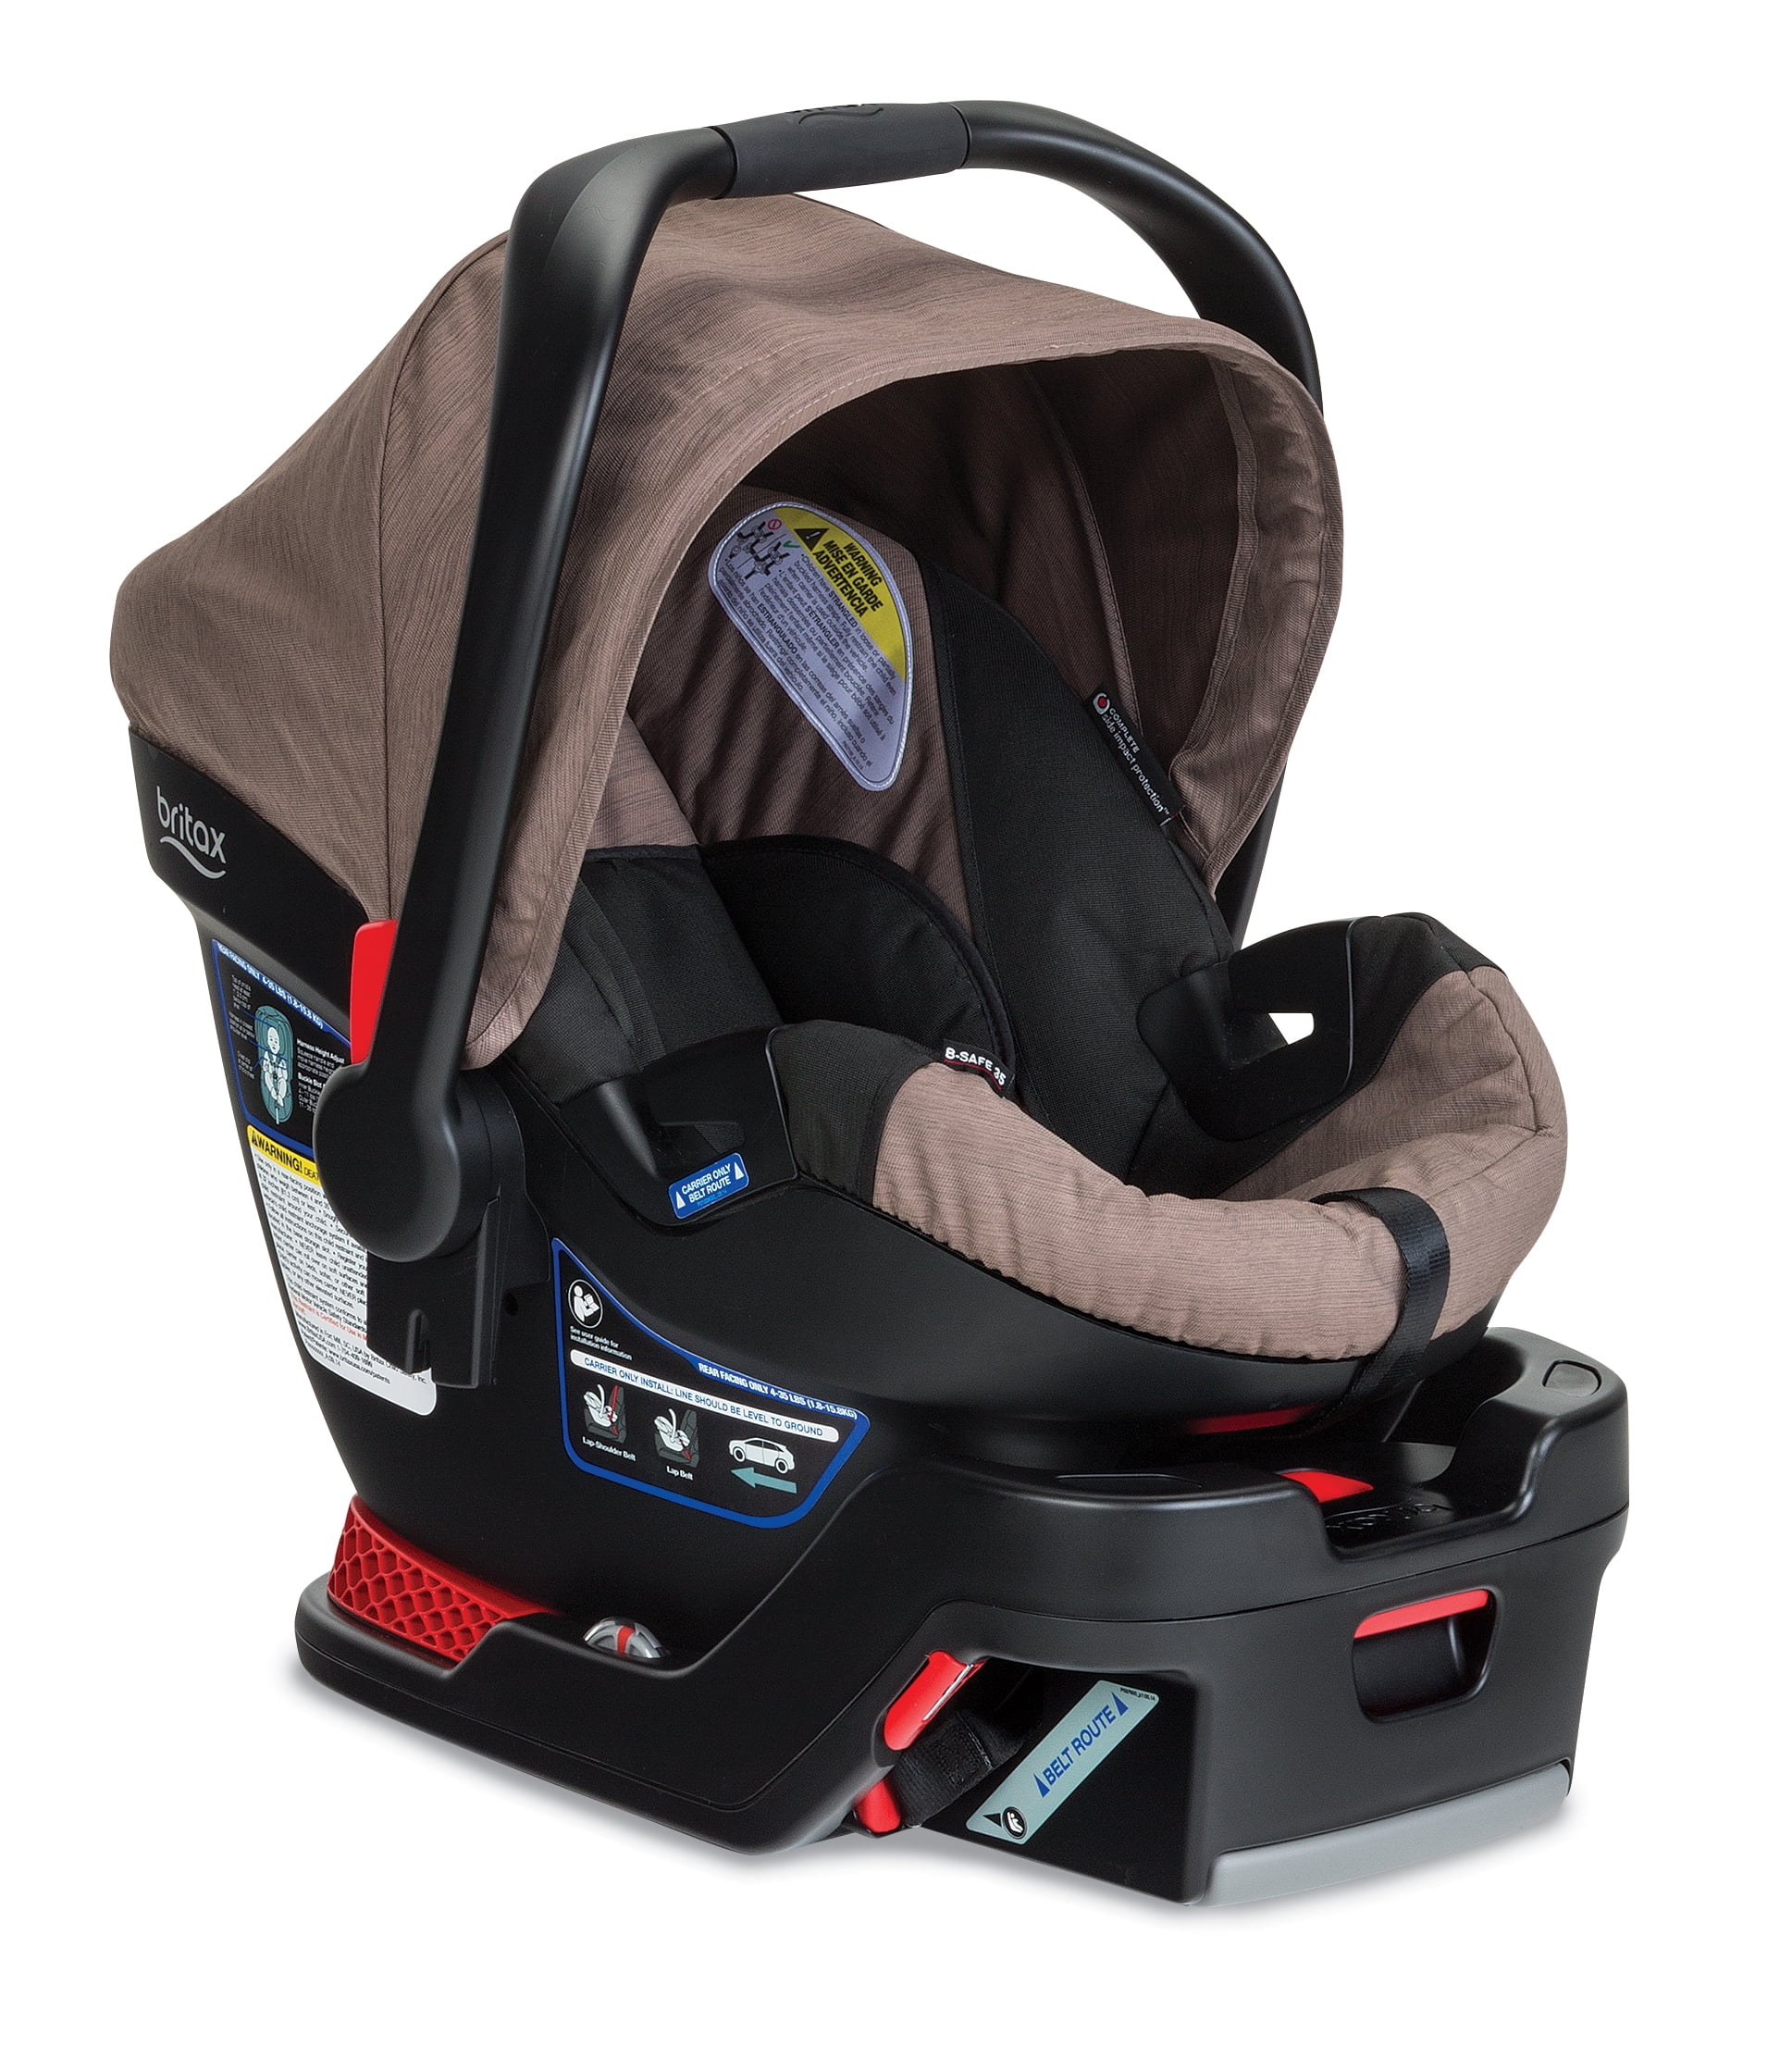 Britax B-Safe 35 Infant Car Seat, Fossil Brown - Walmart.com - Walmart.com